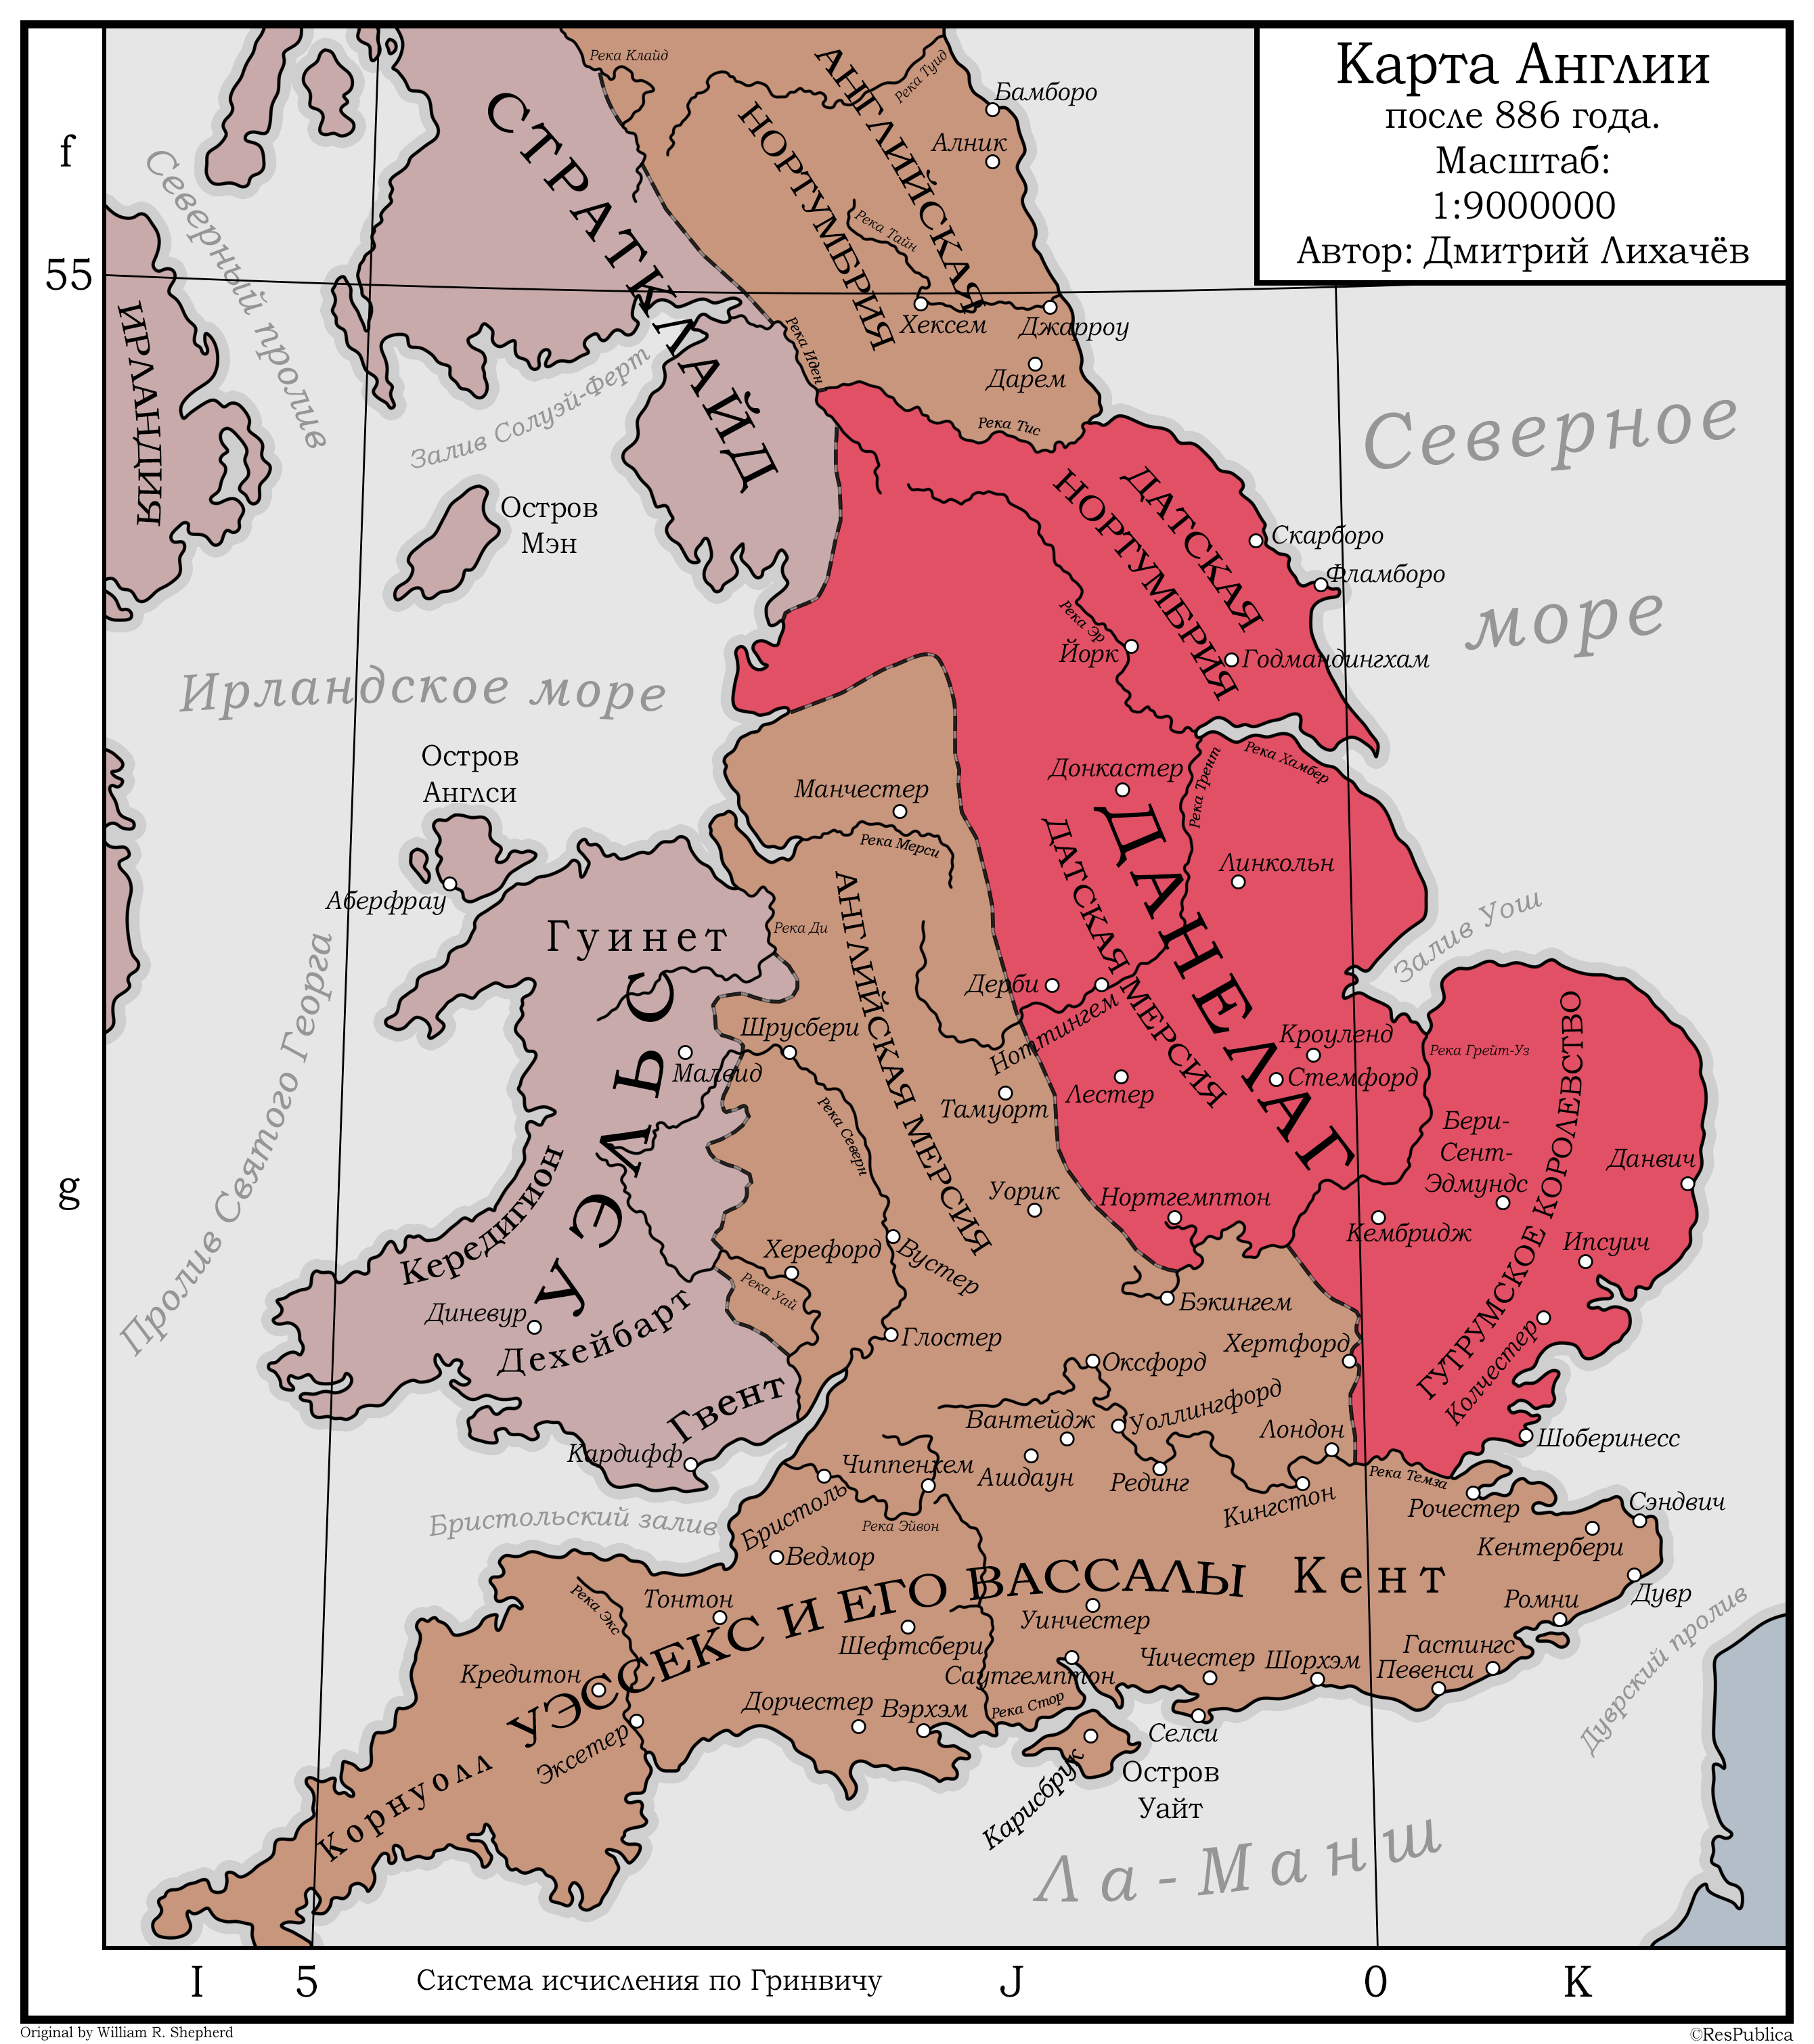 Карта Англии 9 век. Королевства Англии 8-9 век. Карта королевств Англии в 9 веке. Карта Великобритании 15 века. Англия 9 век